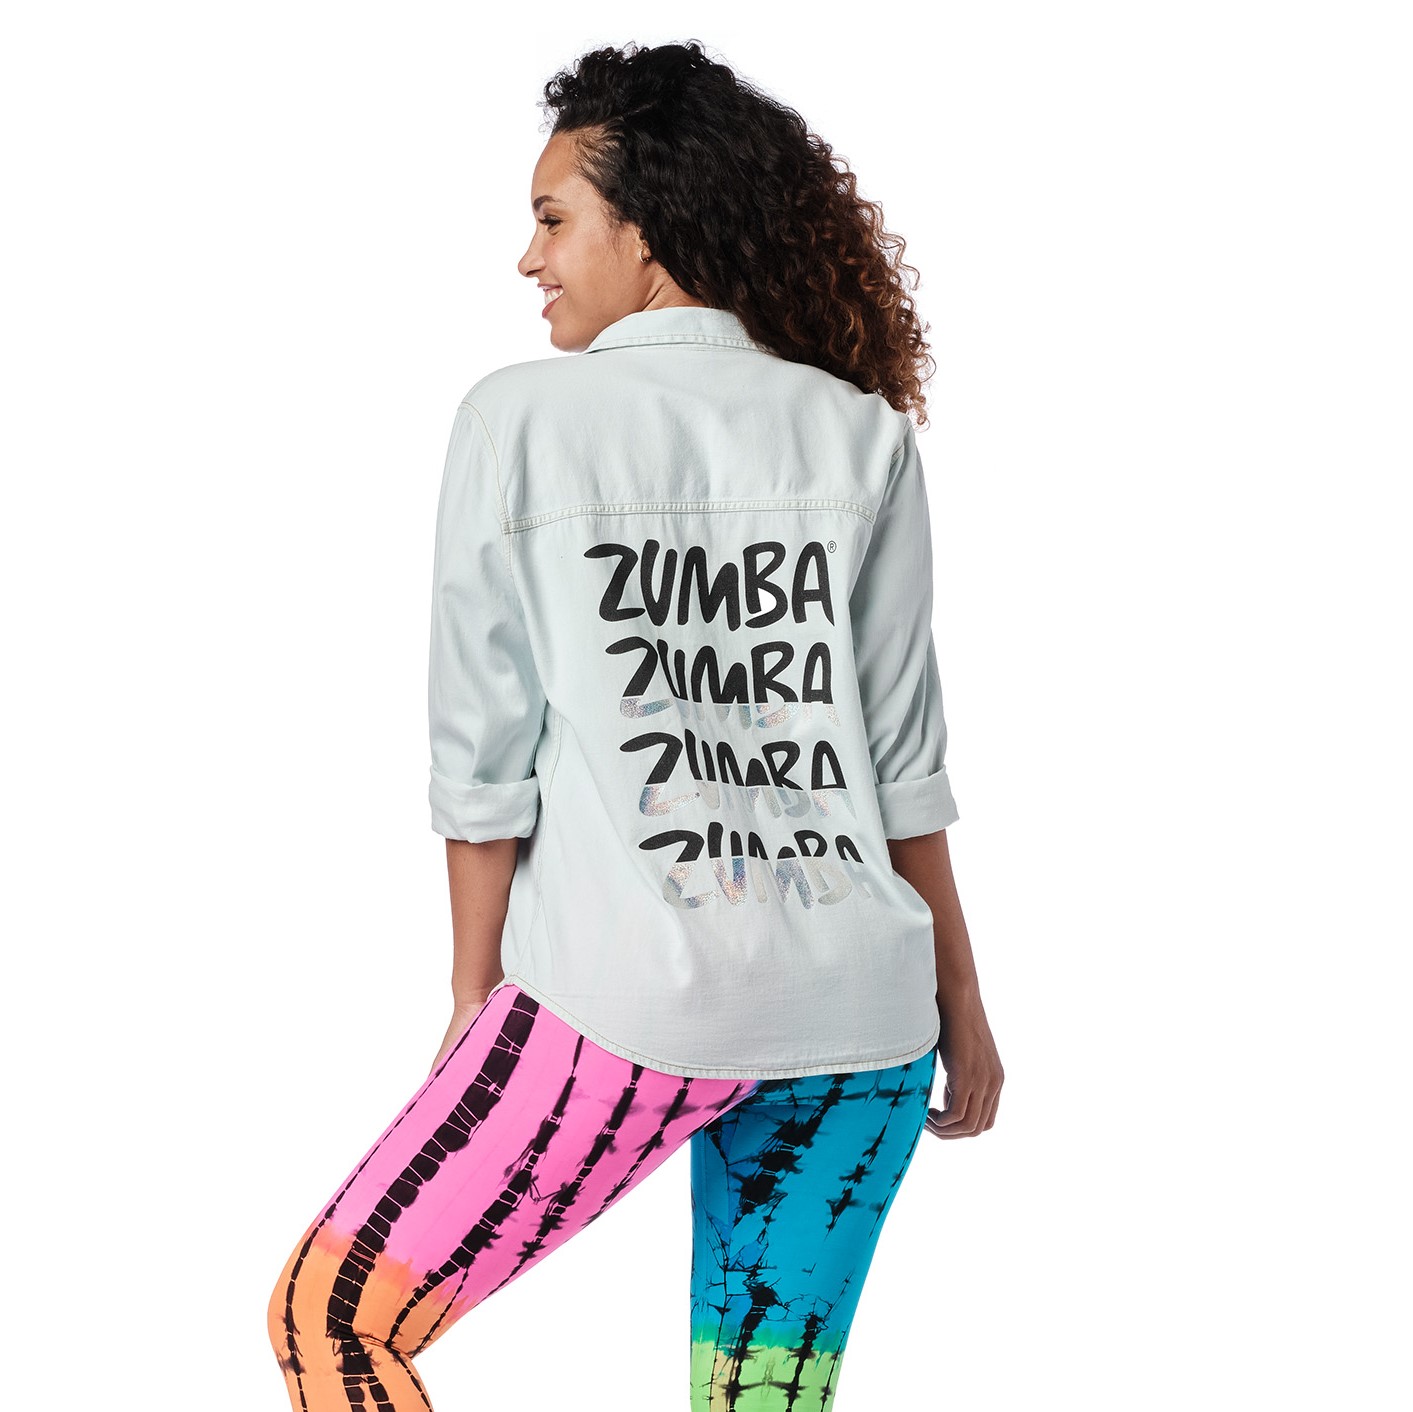 Zumba Forever Button Down | Zumba Shop SEAZumba Shop SEA